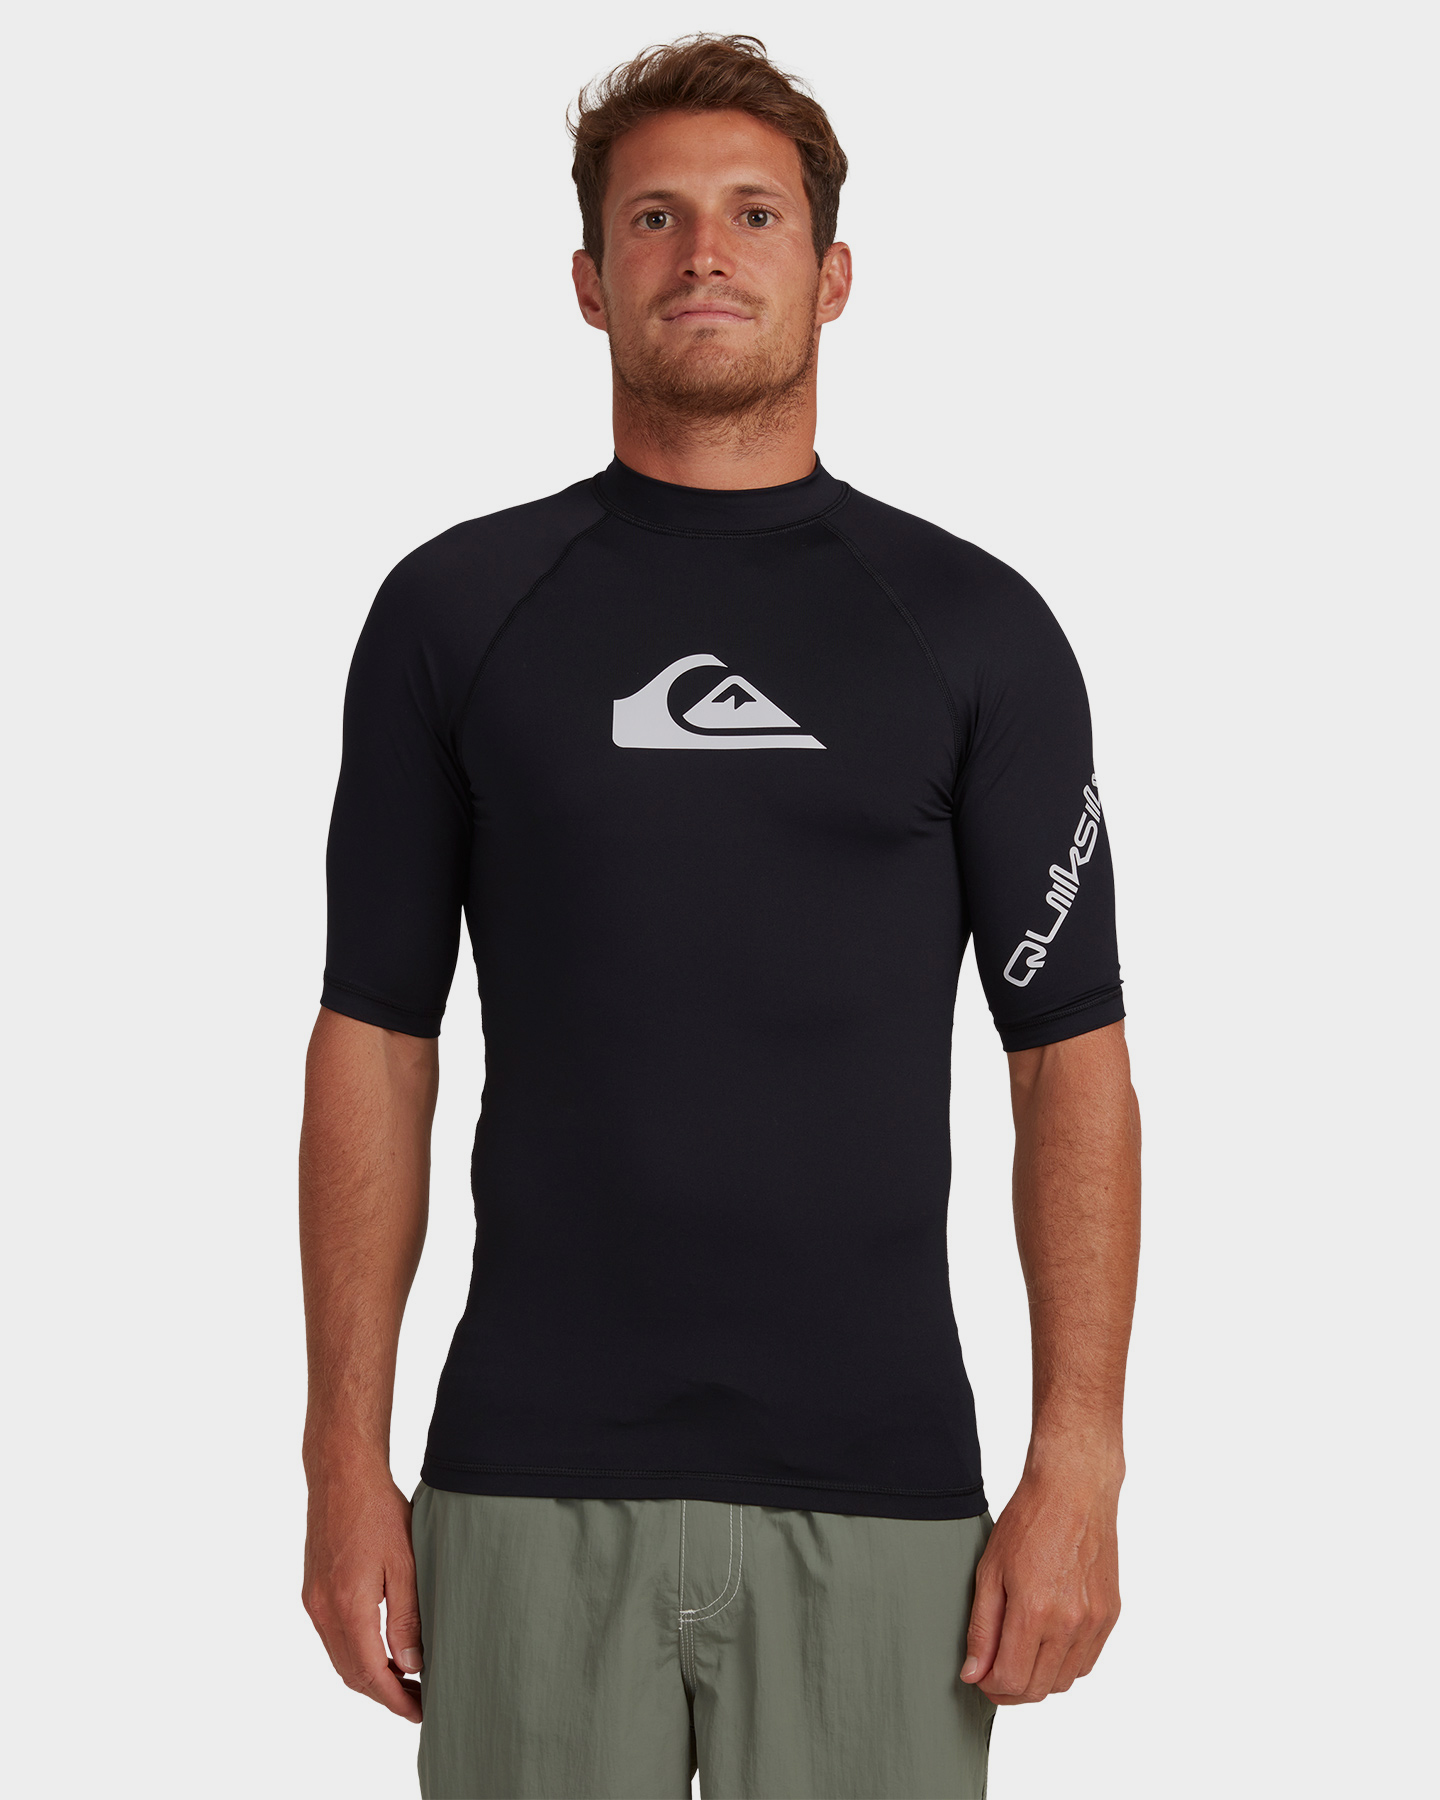 Quiksilver Mens All Time Short Sleeve Rashguard Swim Shirt UPF 50+ 